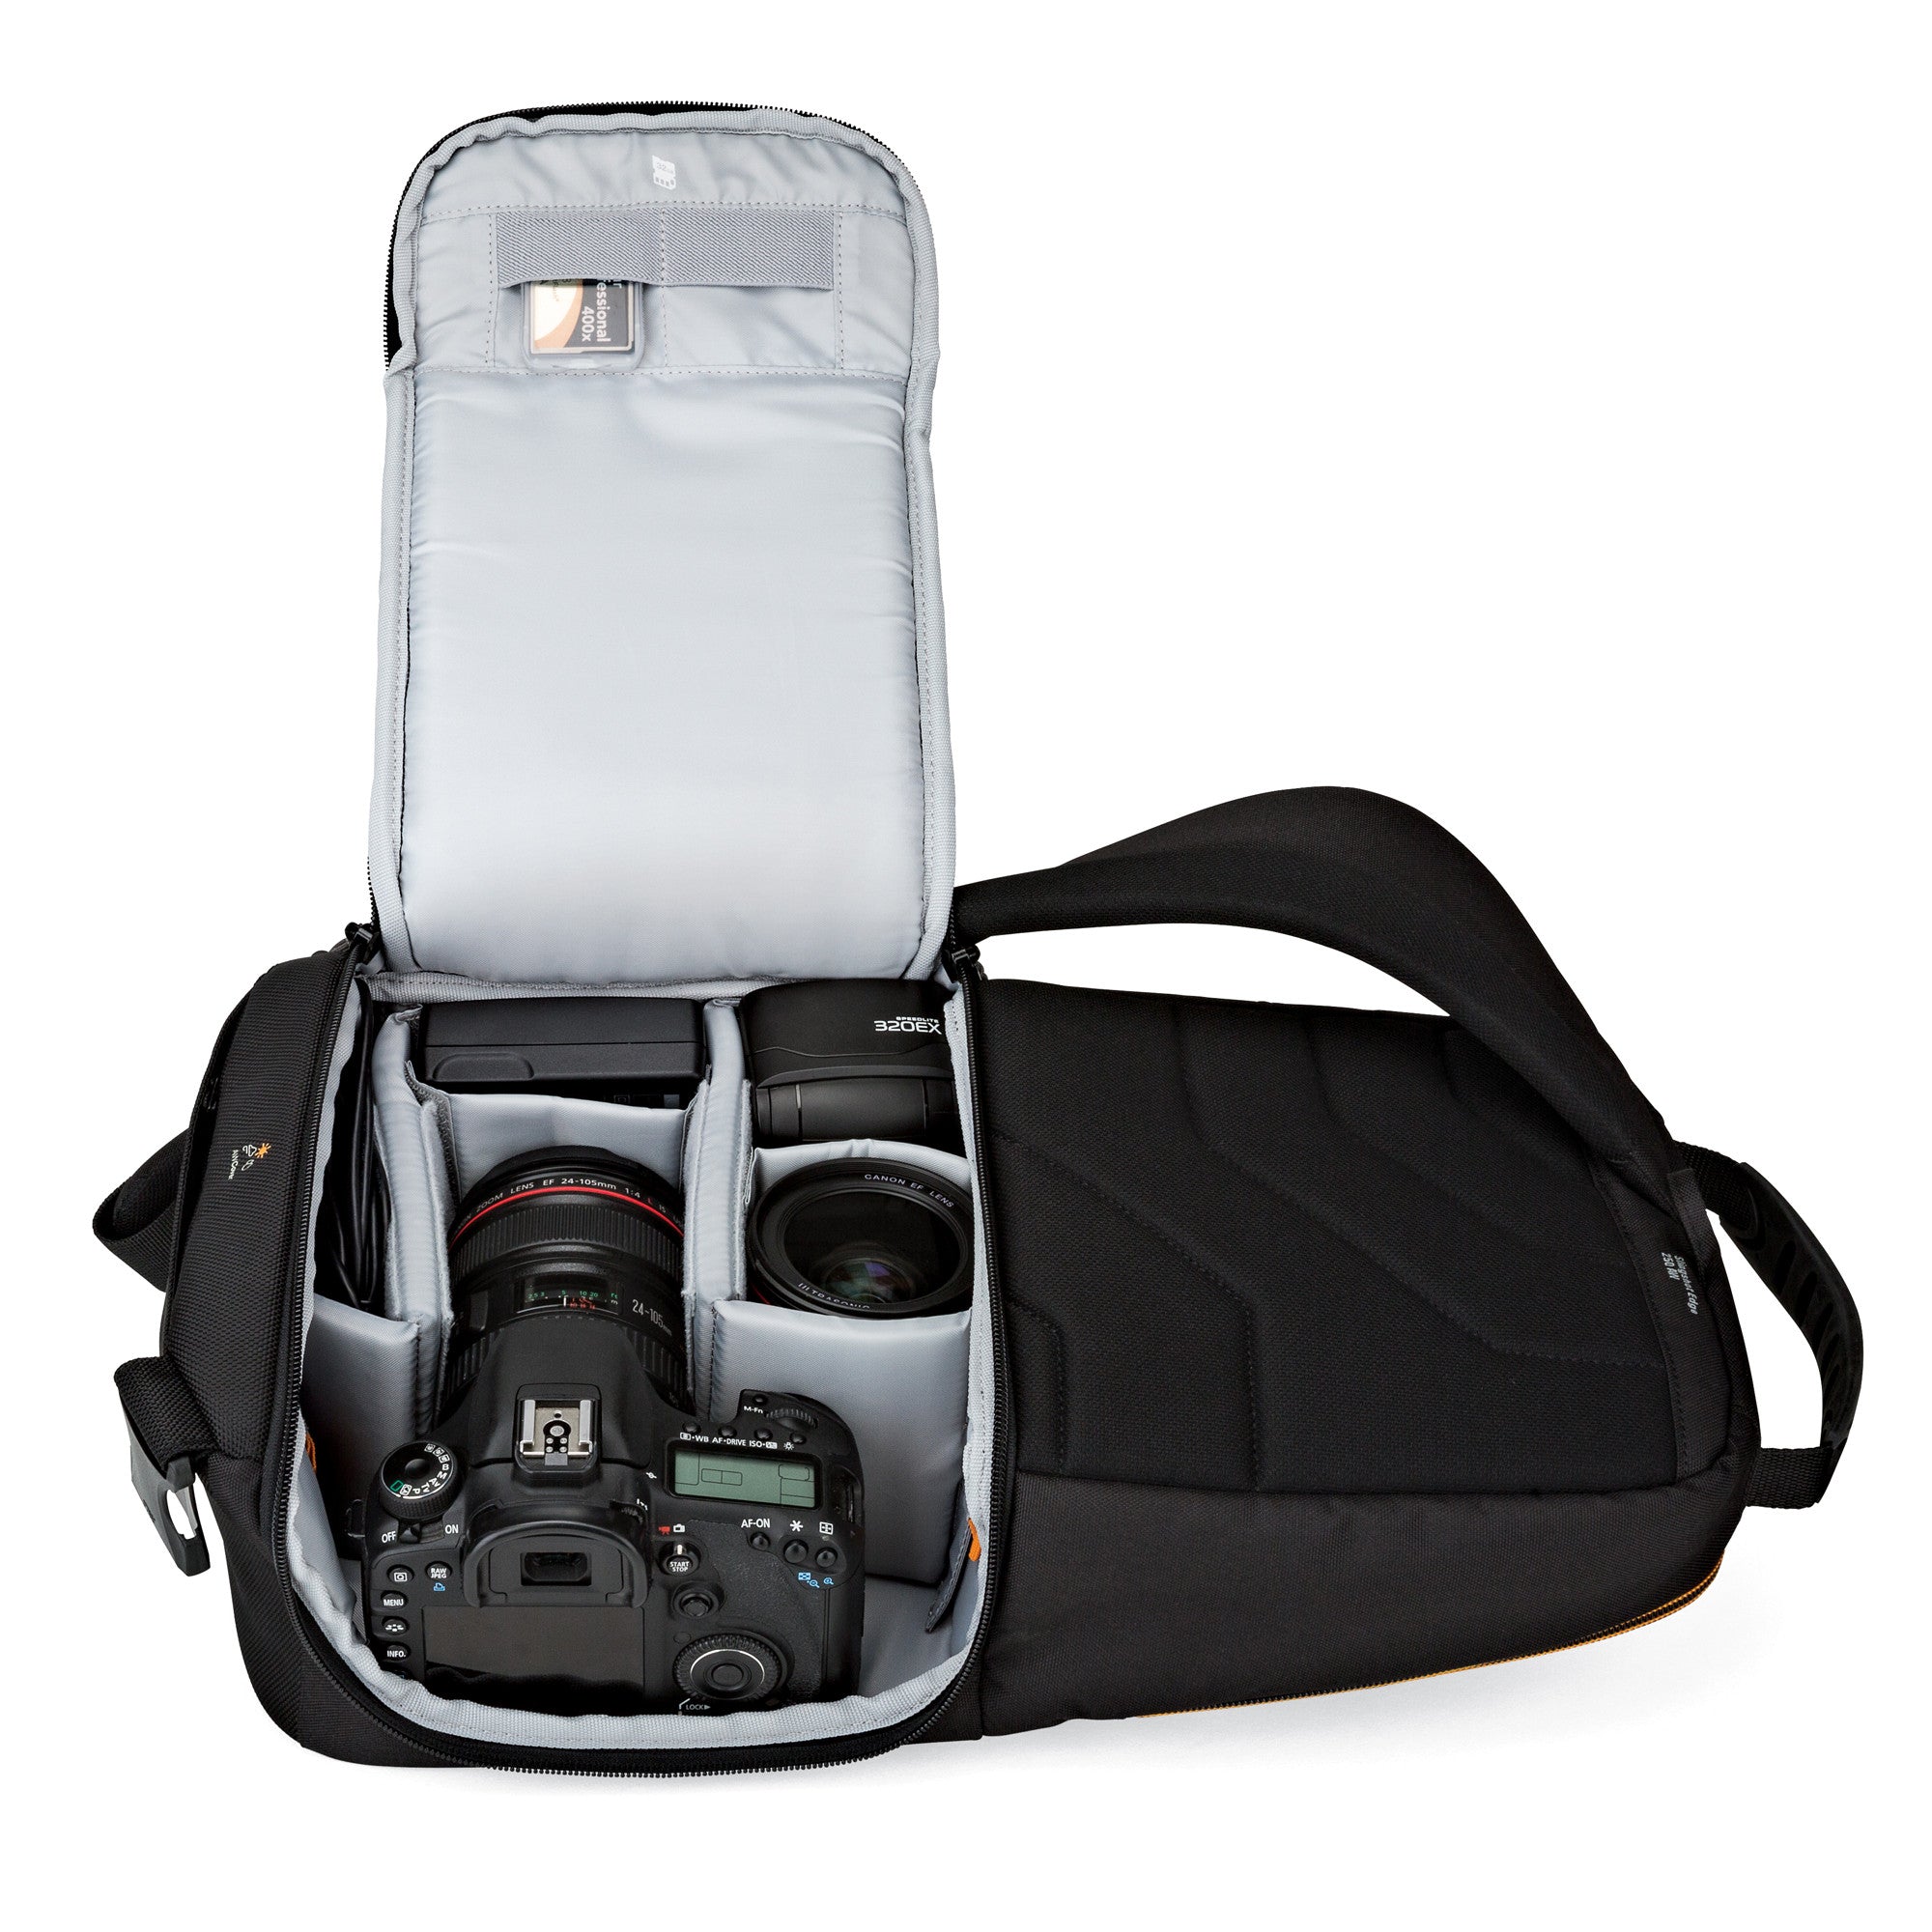 Lowepro Slingshot Edge 250 AW Camera Bag, bags sling / daypacks, Lowepro - Pictureline  - 7